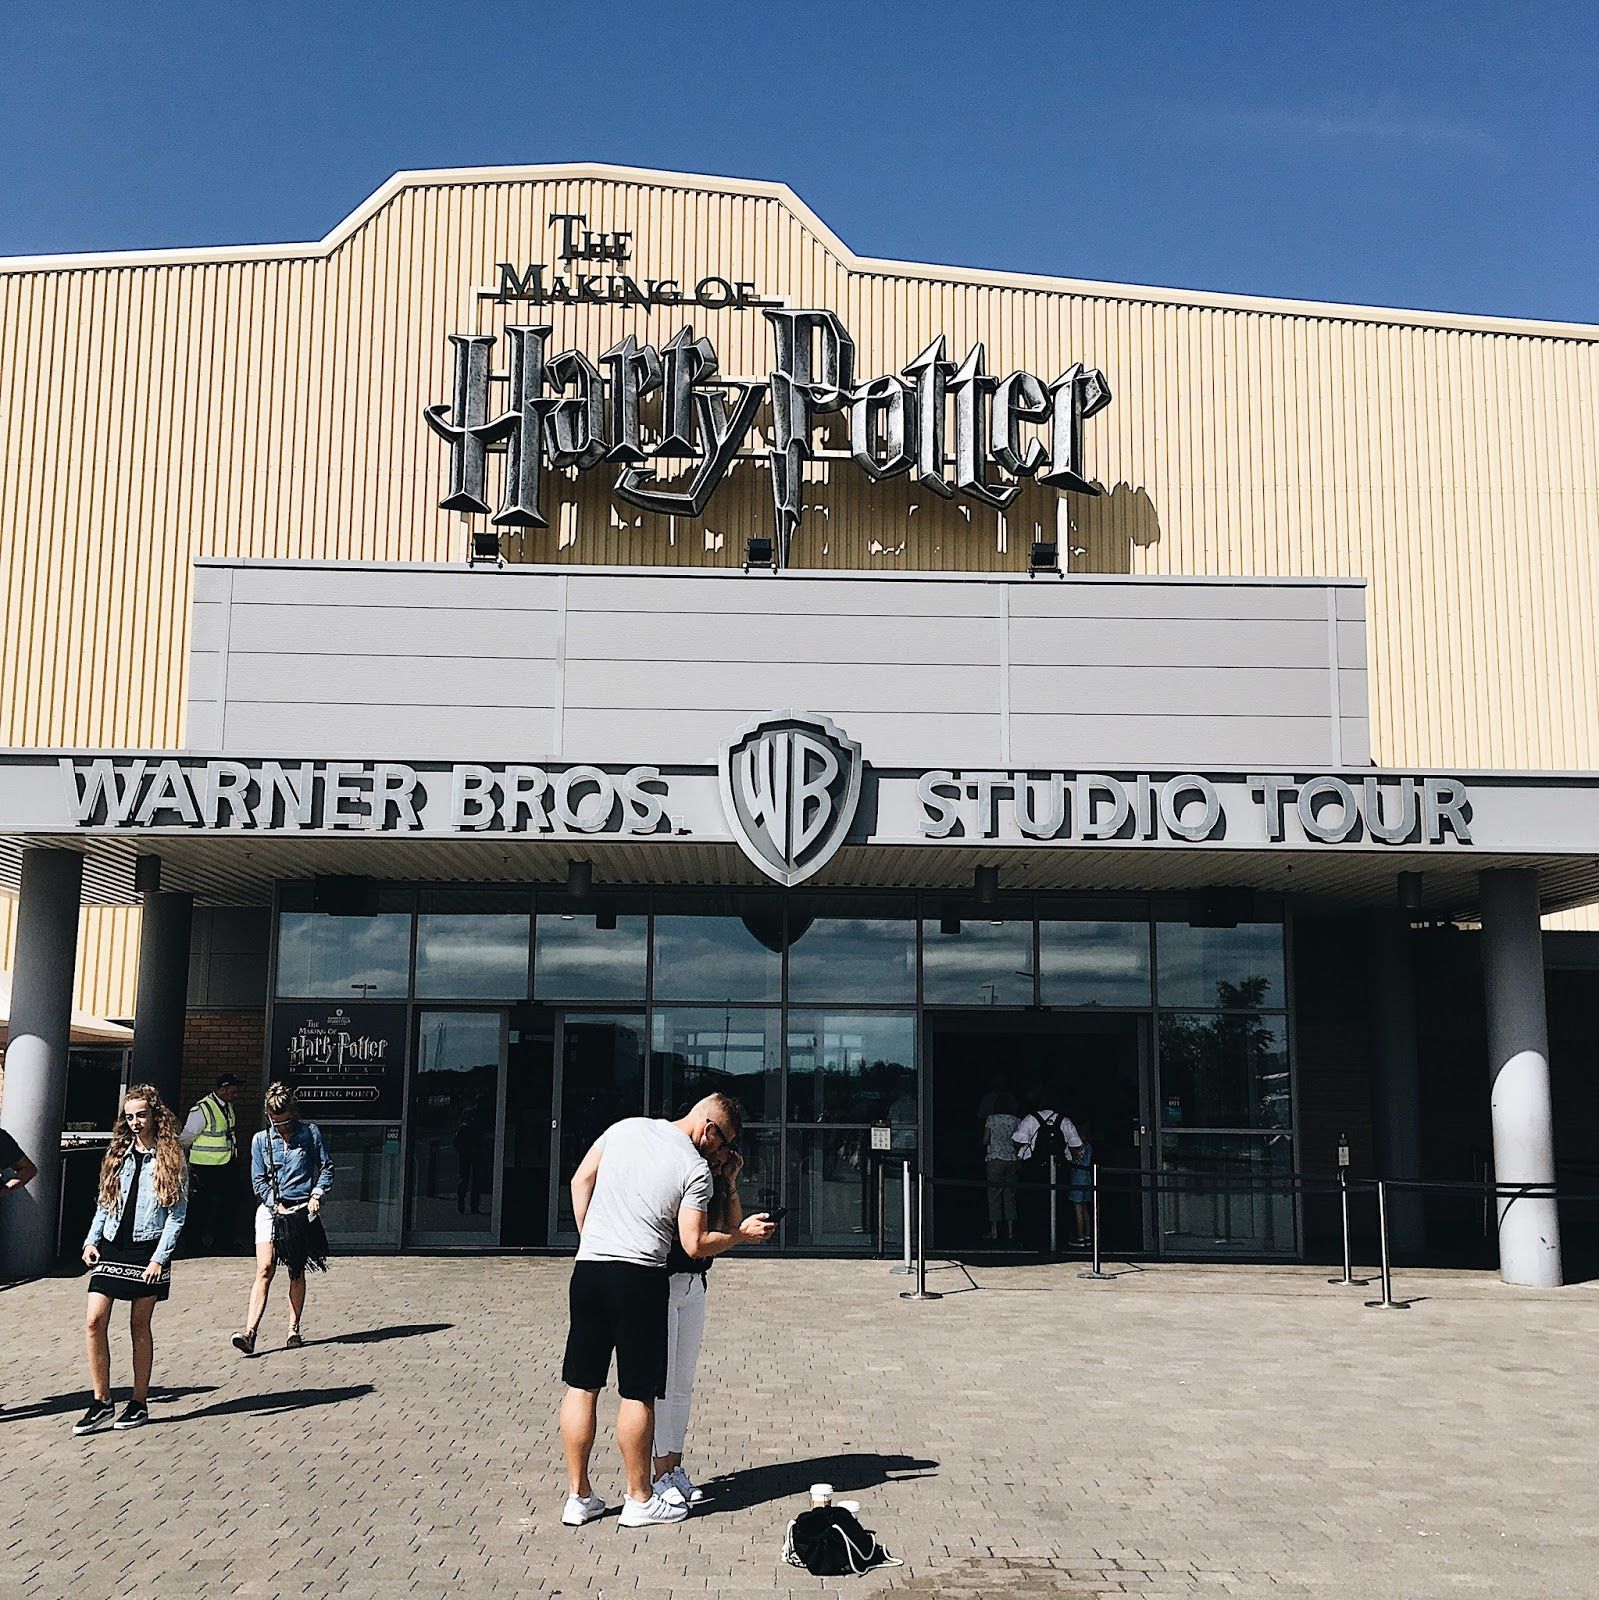 The Harry Potter Warner Bros Studio Tour